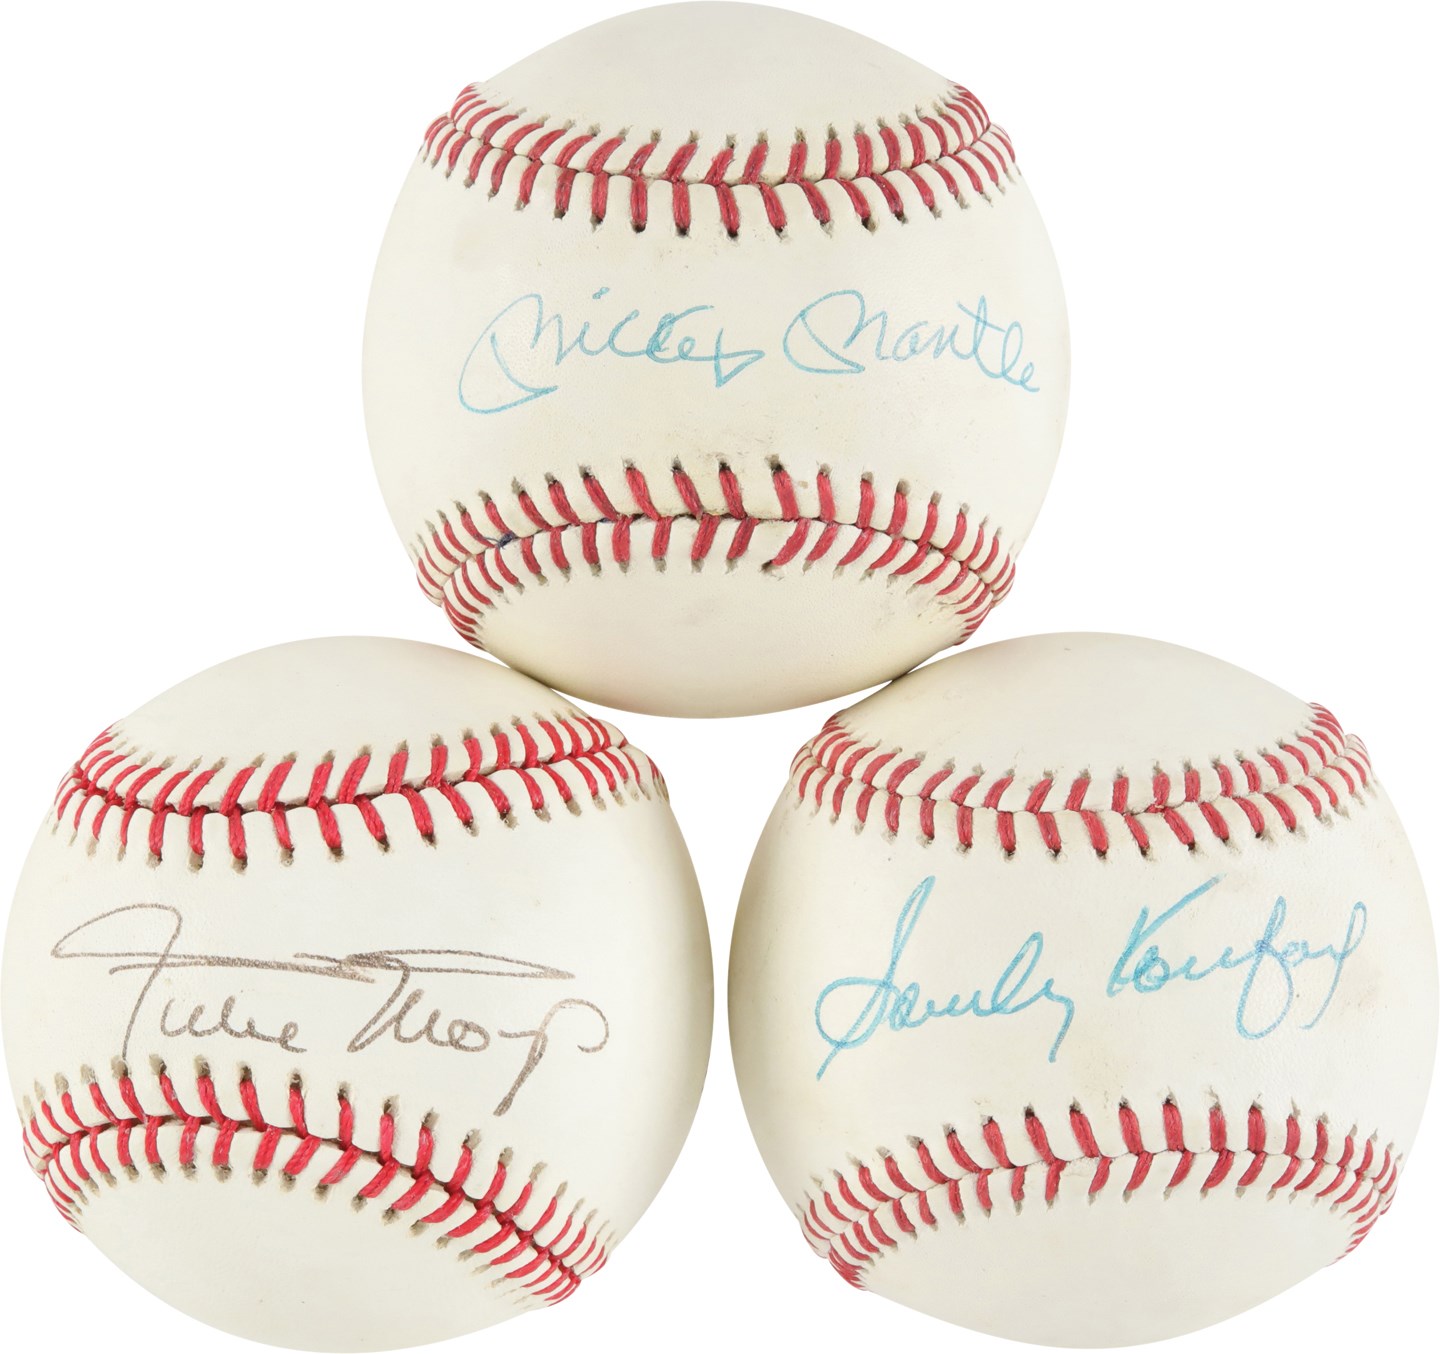 Baseball Autographs - Single-Signed Baseballs - Mantle, Koufax, and Mays (3)